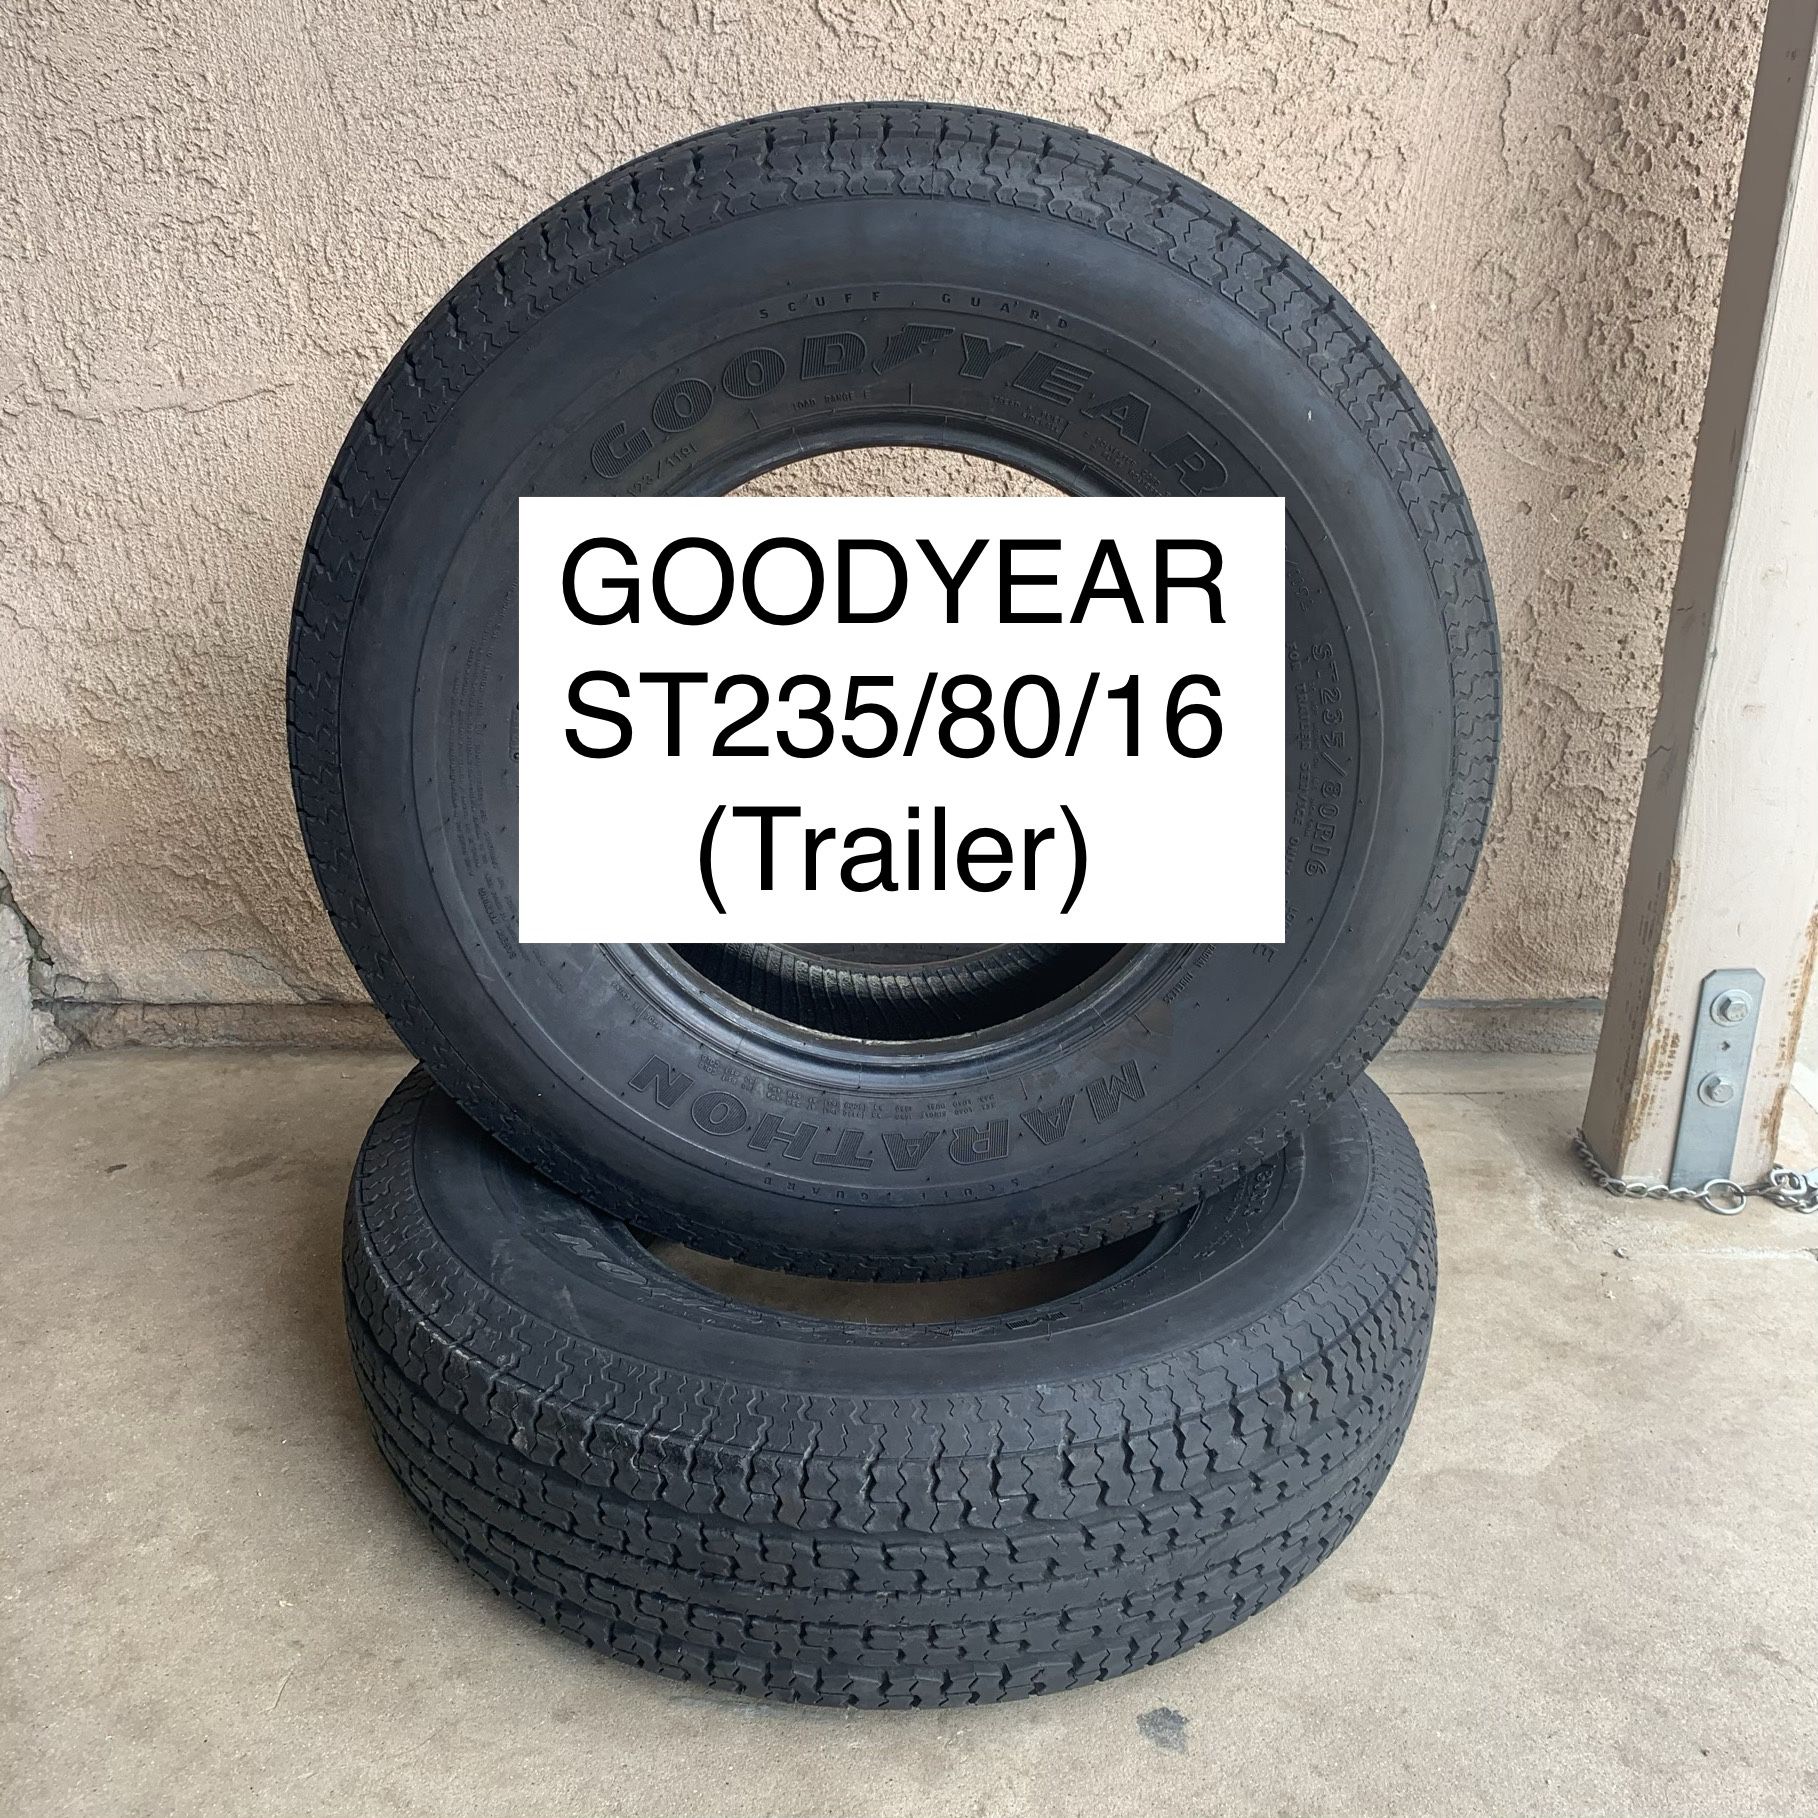 Trailer tires ST 235/75/16